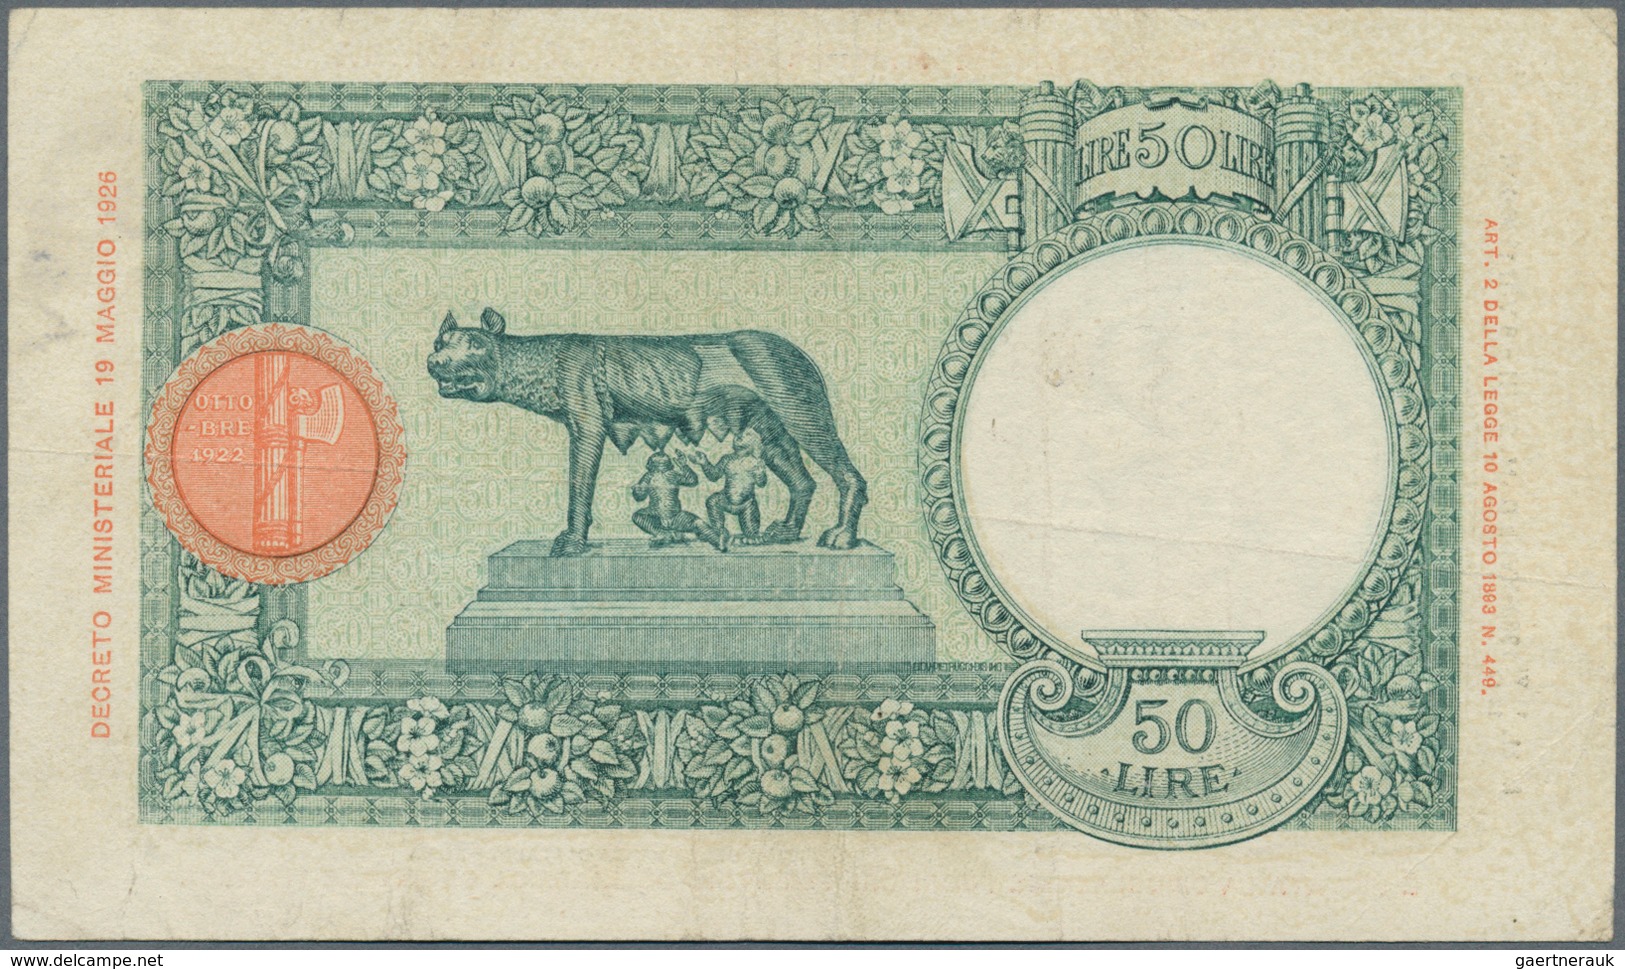 Italian East Africa / Italienisch Ost-Afrika: 50 Lire 1938 P. 1, Used With Folds, Pressed But Strong - Italienisch Ostafrika